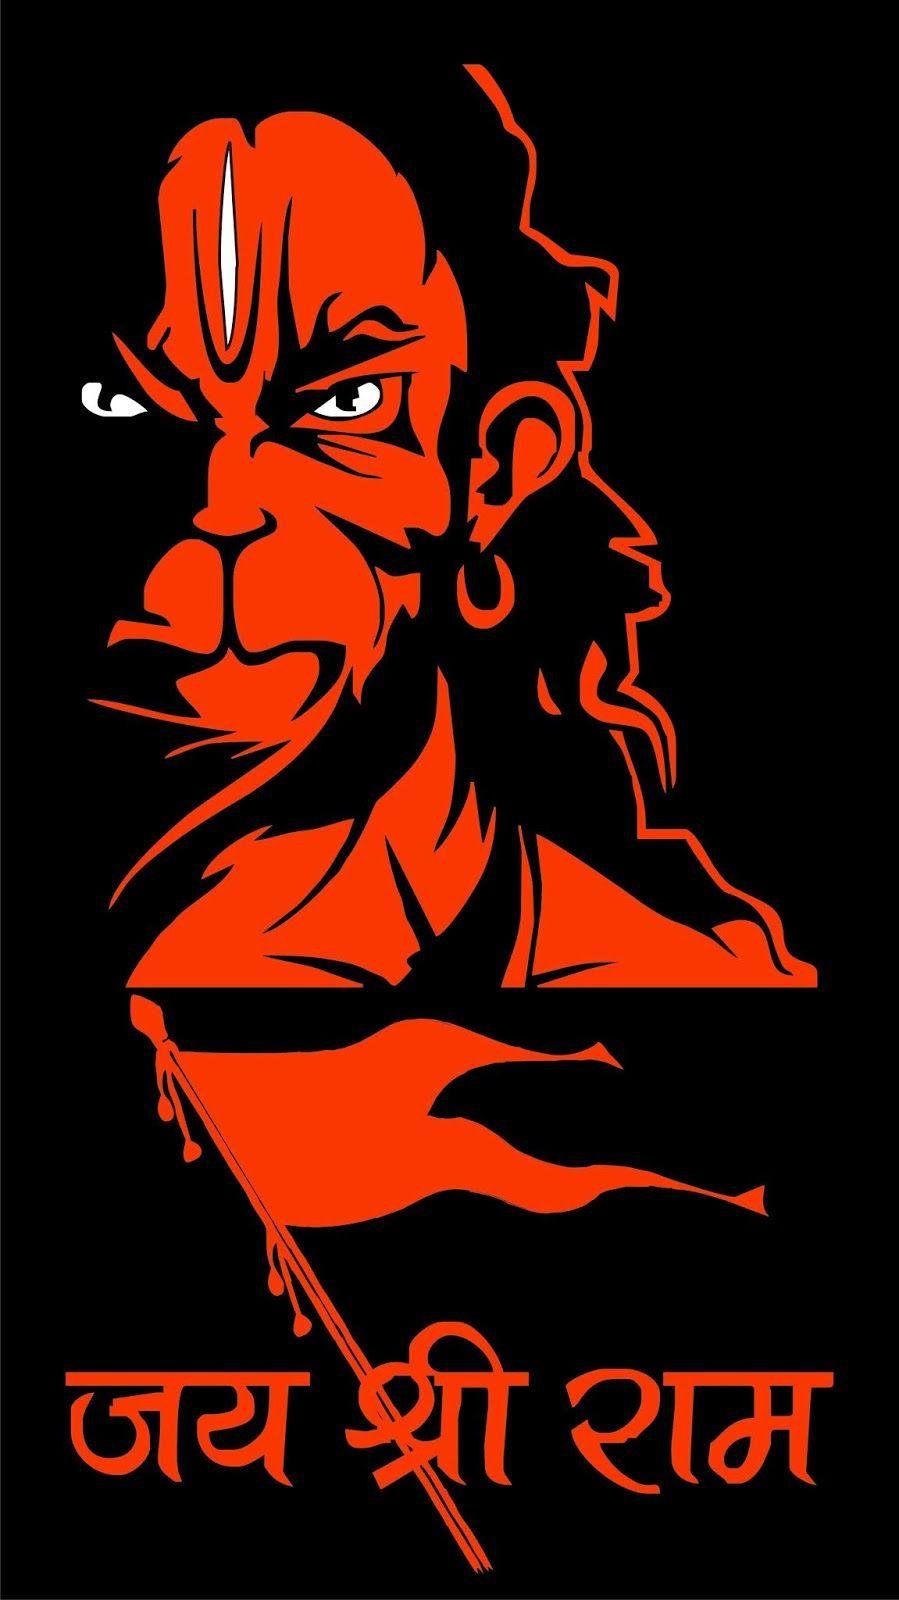 Lord Hanuman - Jai Shree Ram